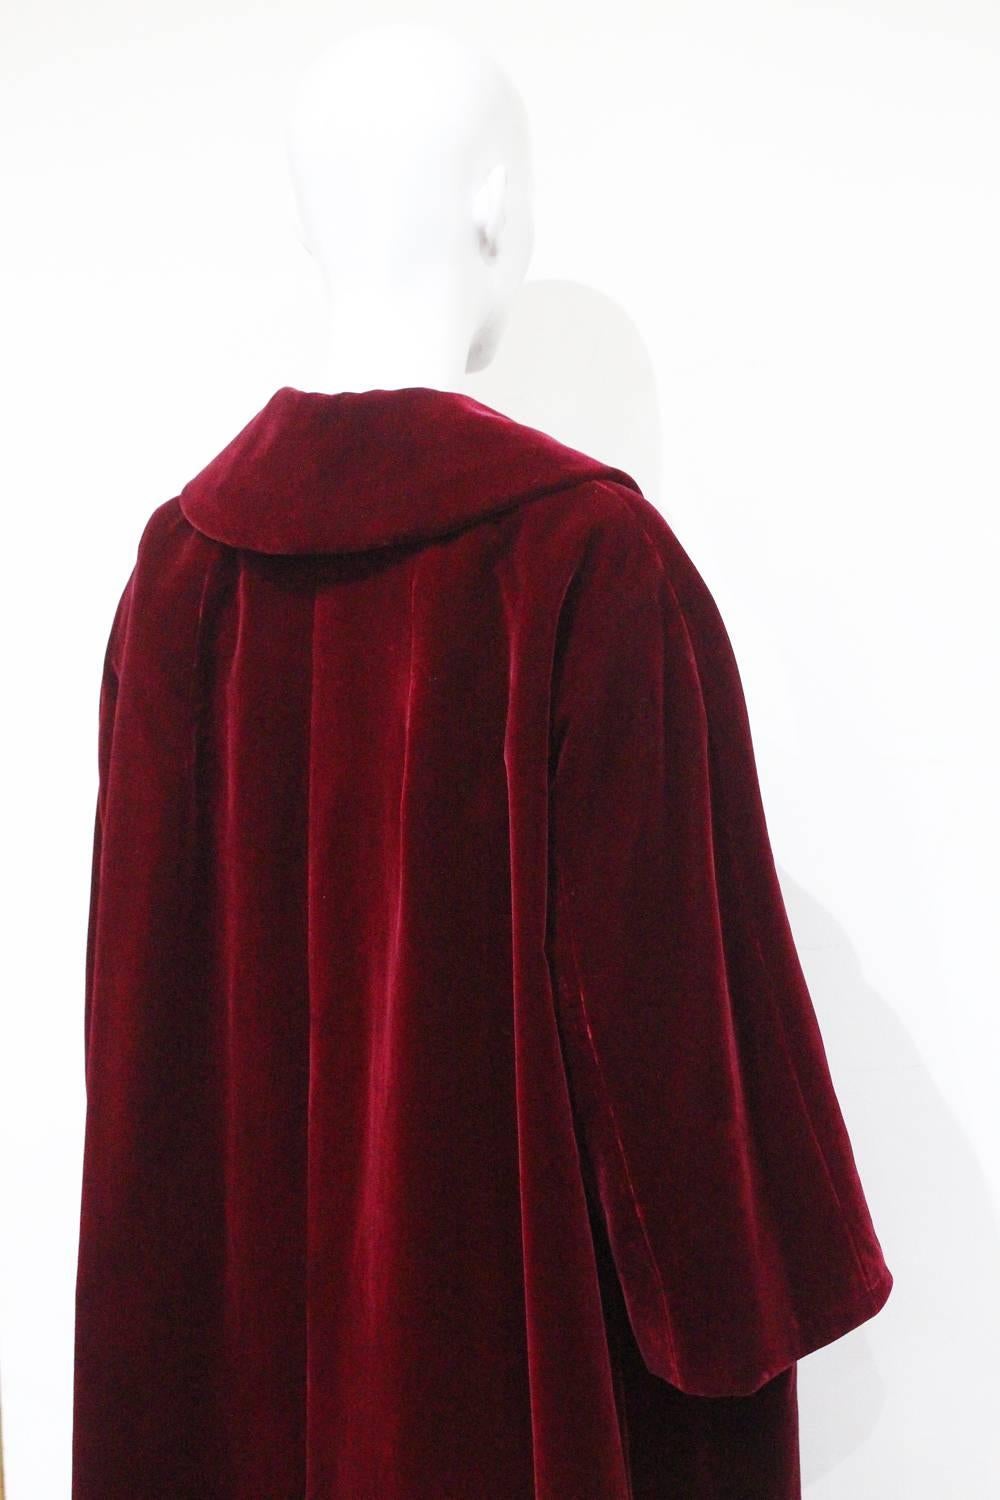 Christian Dior Haute Couture silk velvet opera coat, Autumn/Winter 1956 1